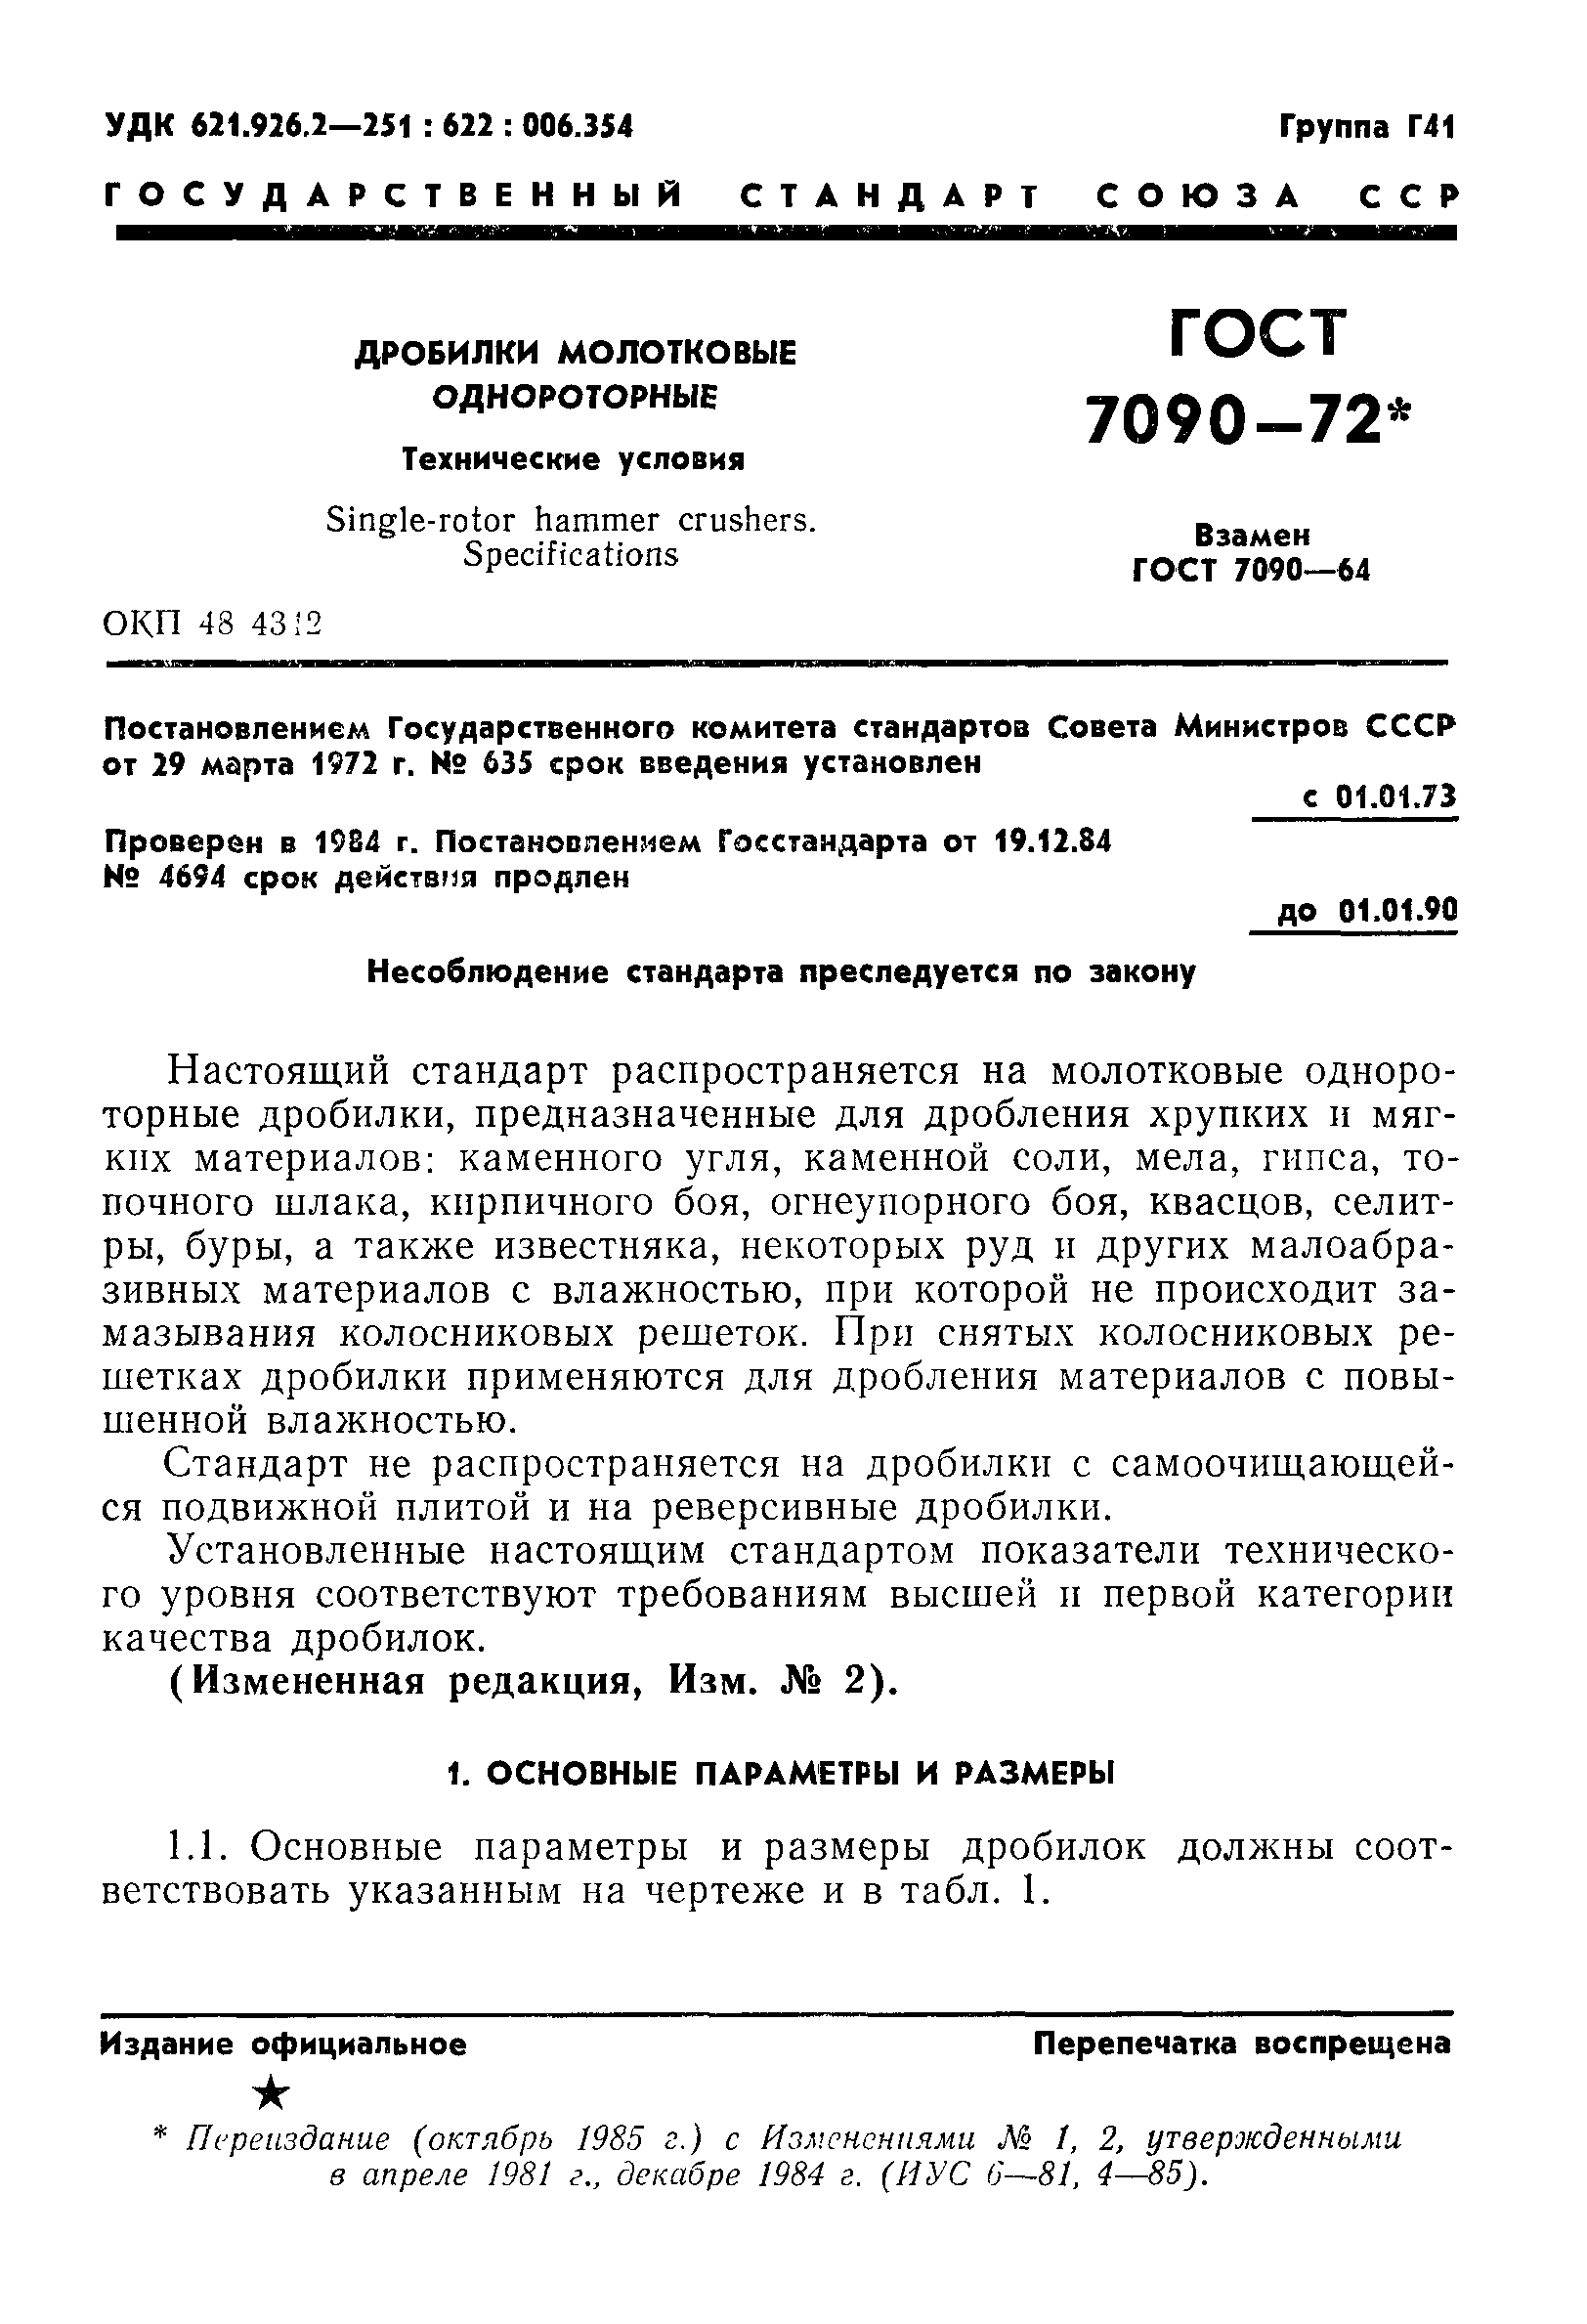 ГОСТ 7090-72